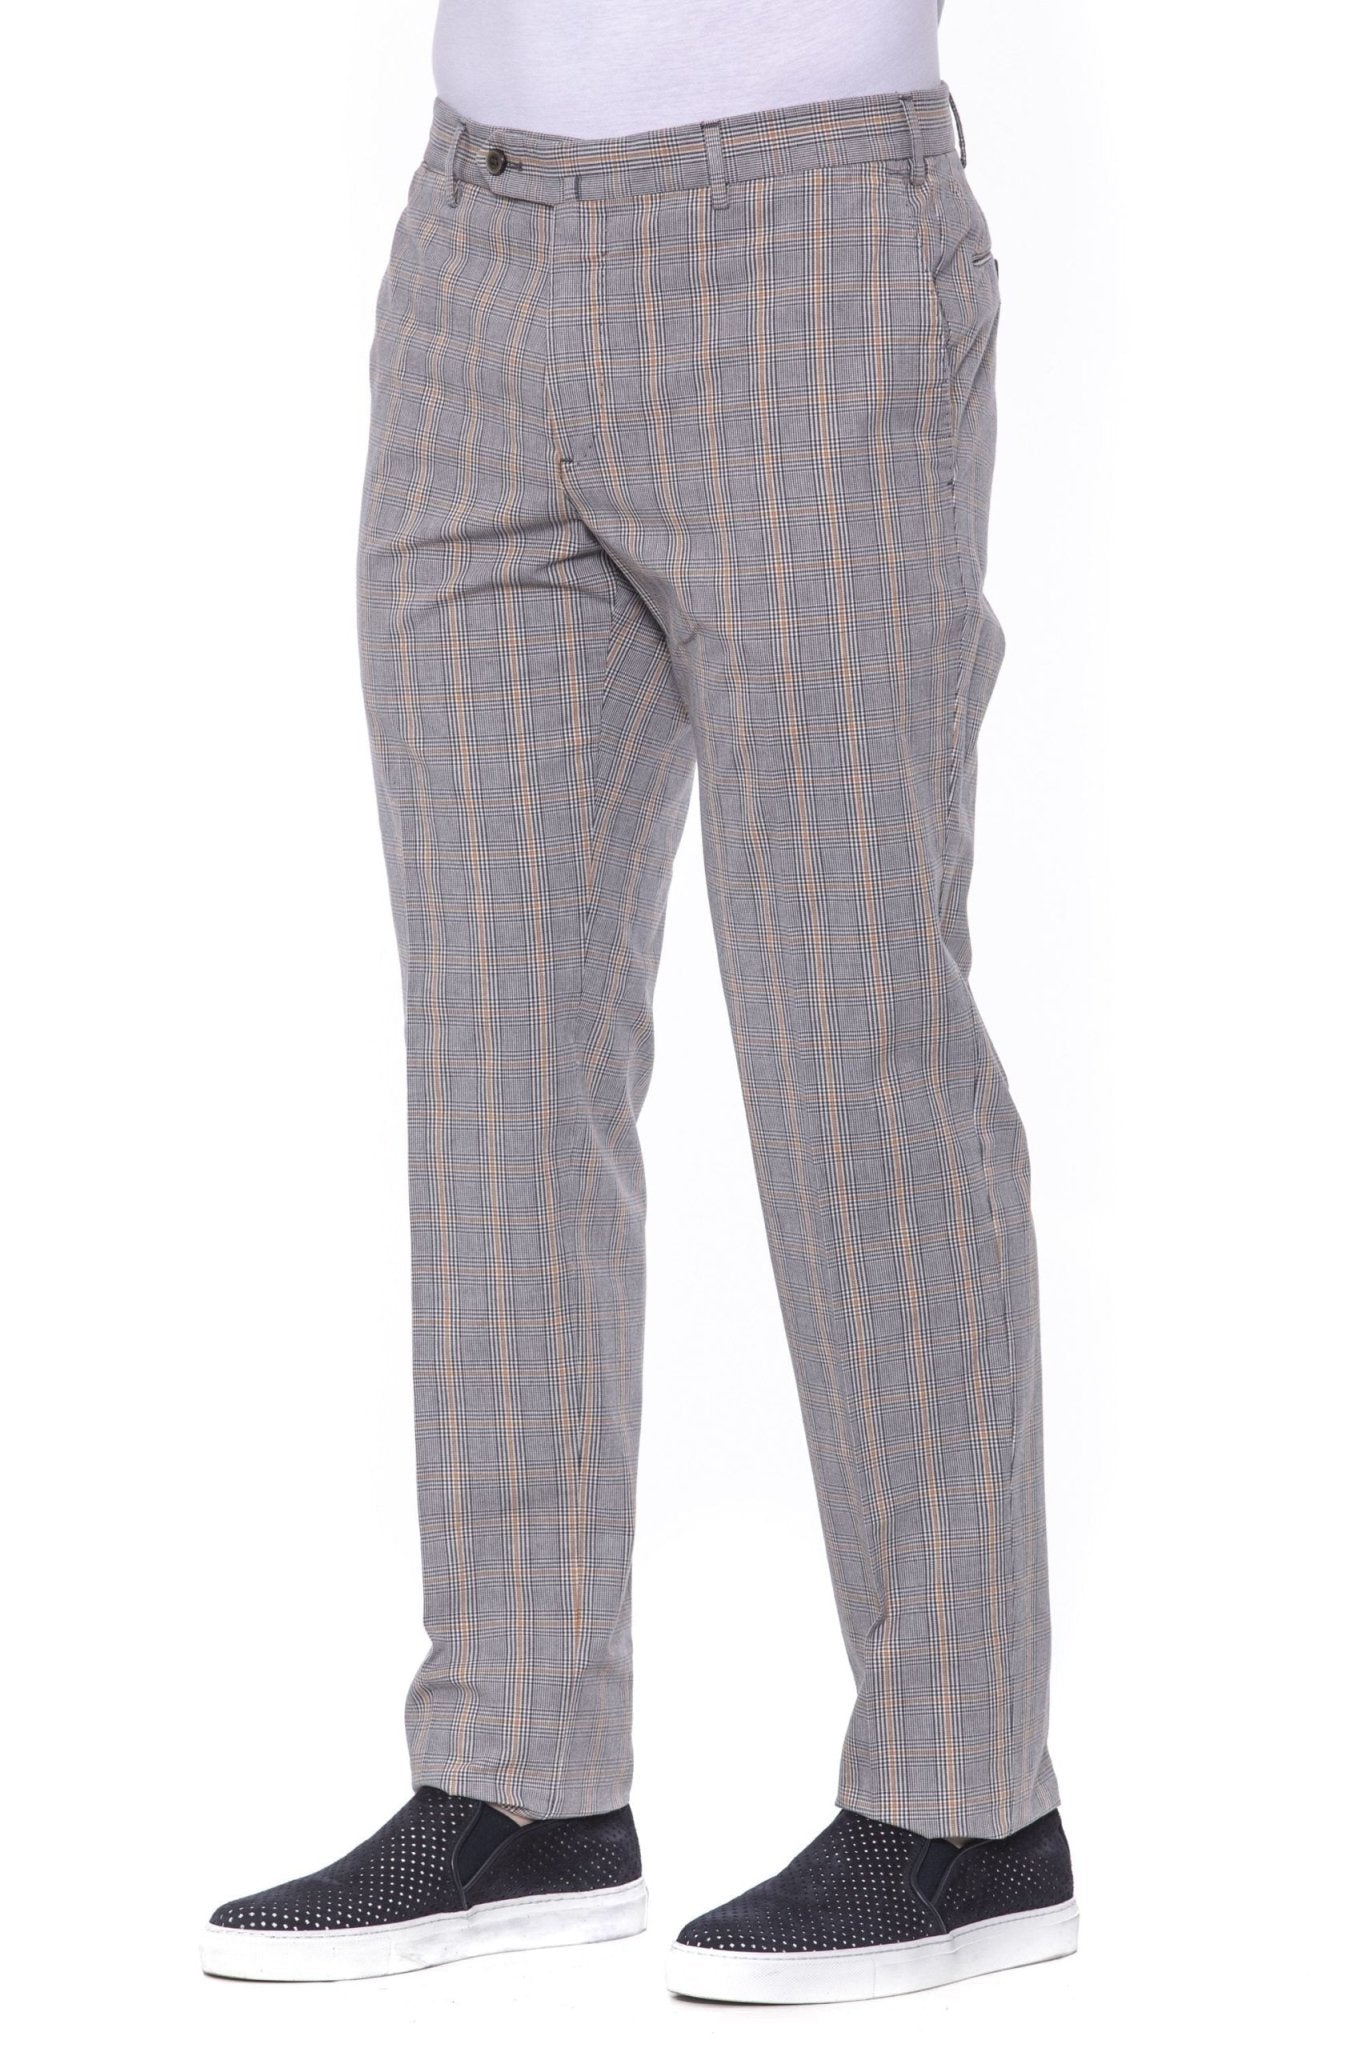 PT Torino Gray Cotton Jeans & Pant - Fizigo